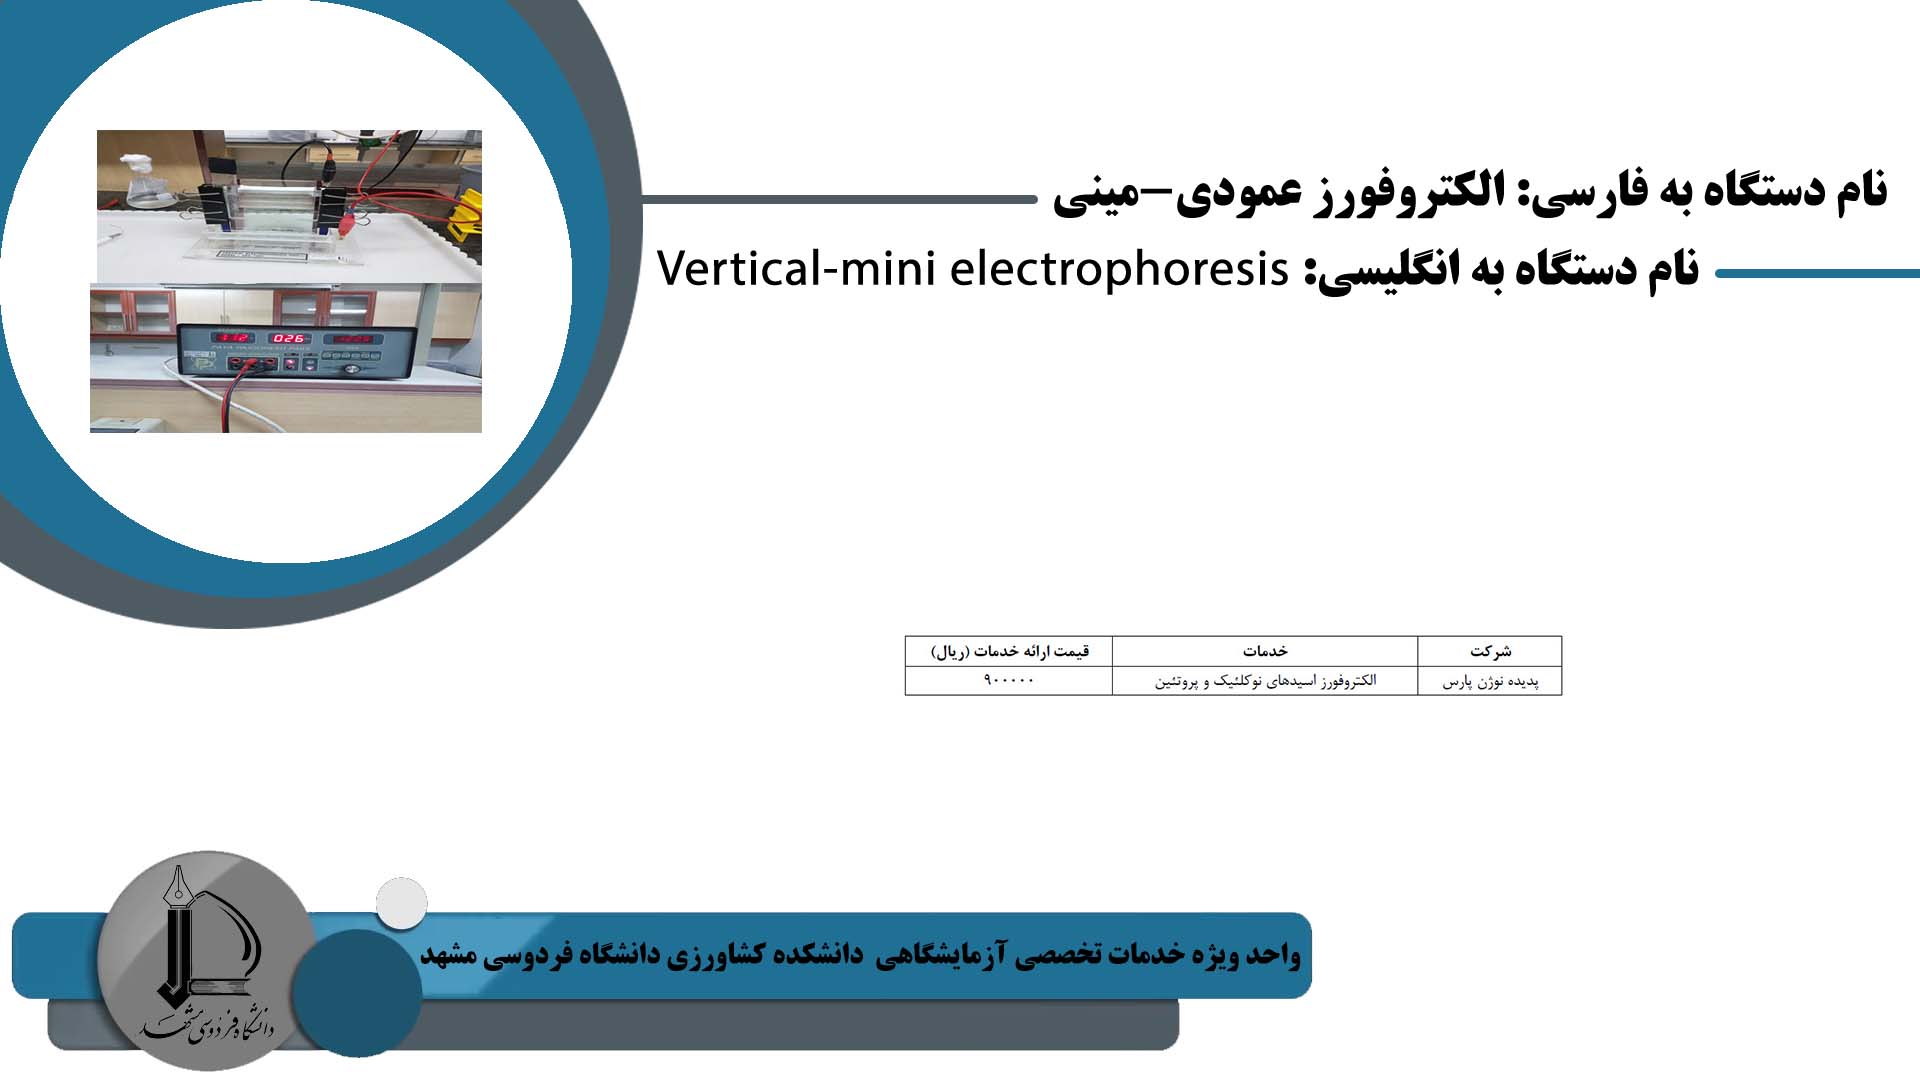 Vertical-mini electrophoresis